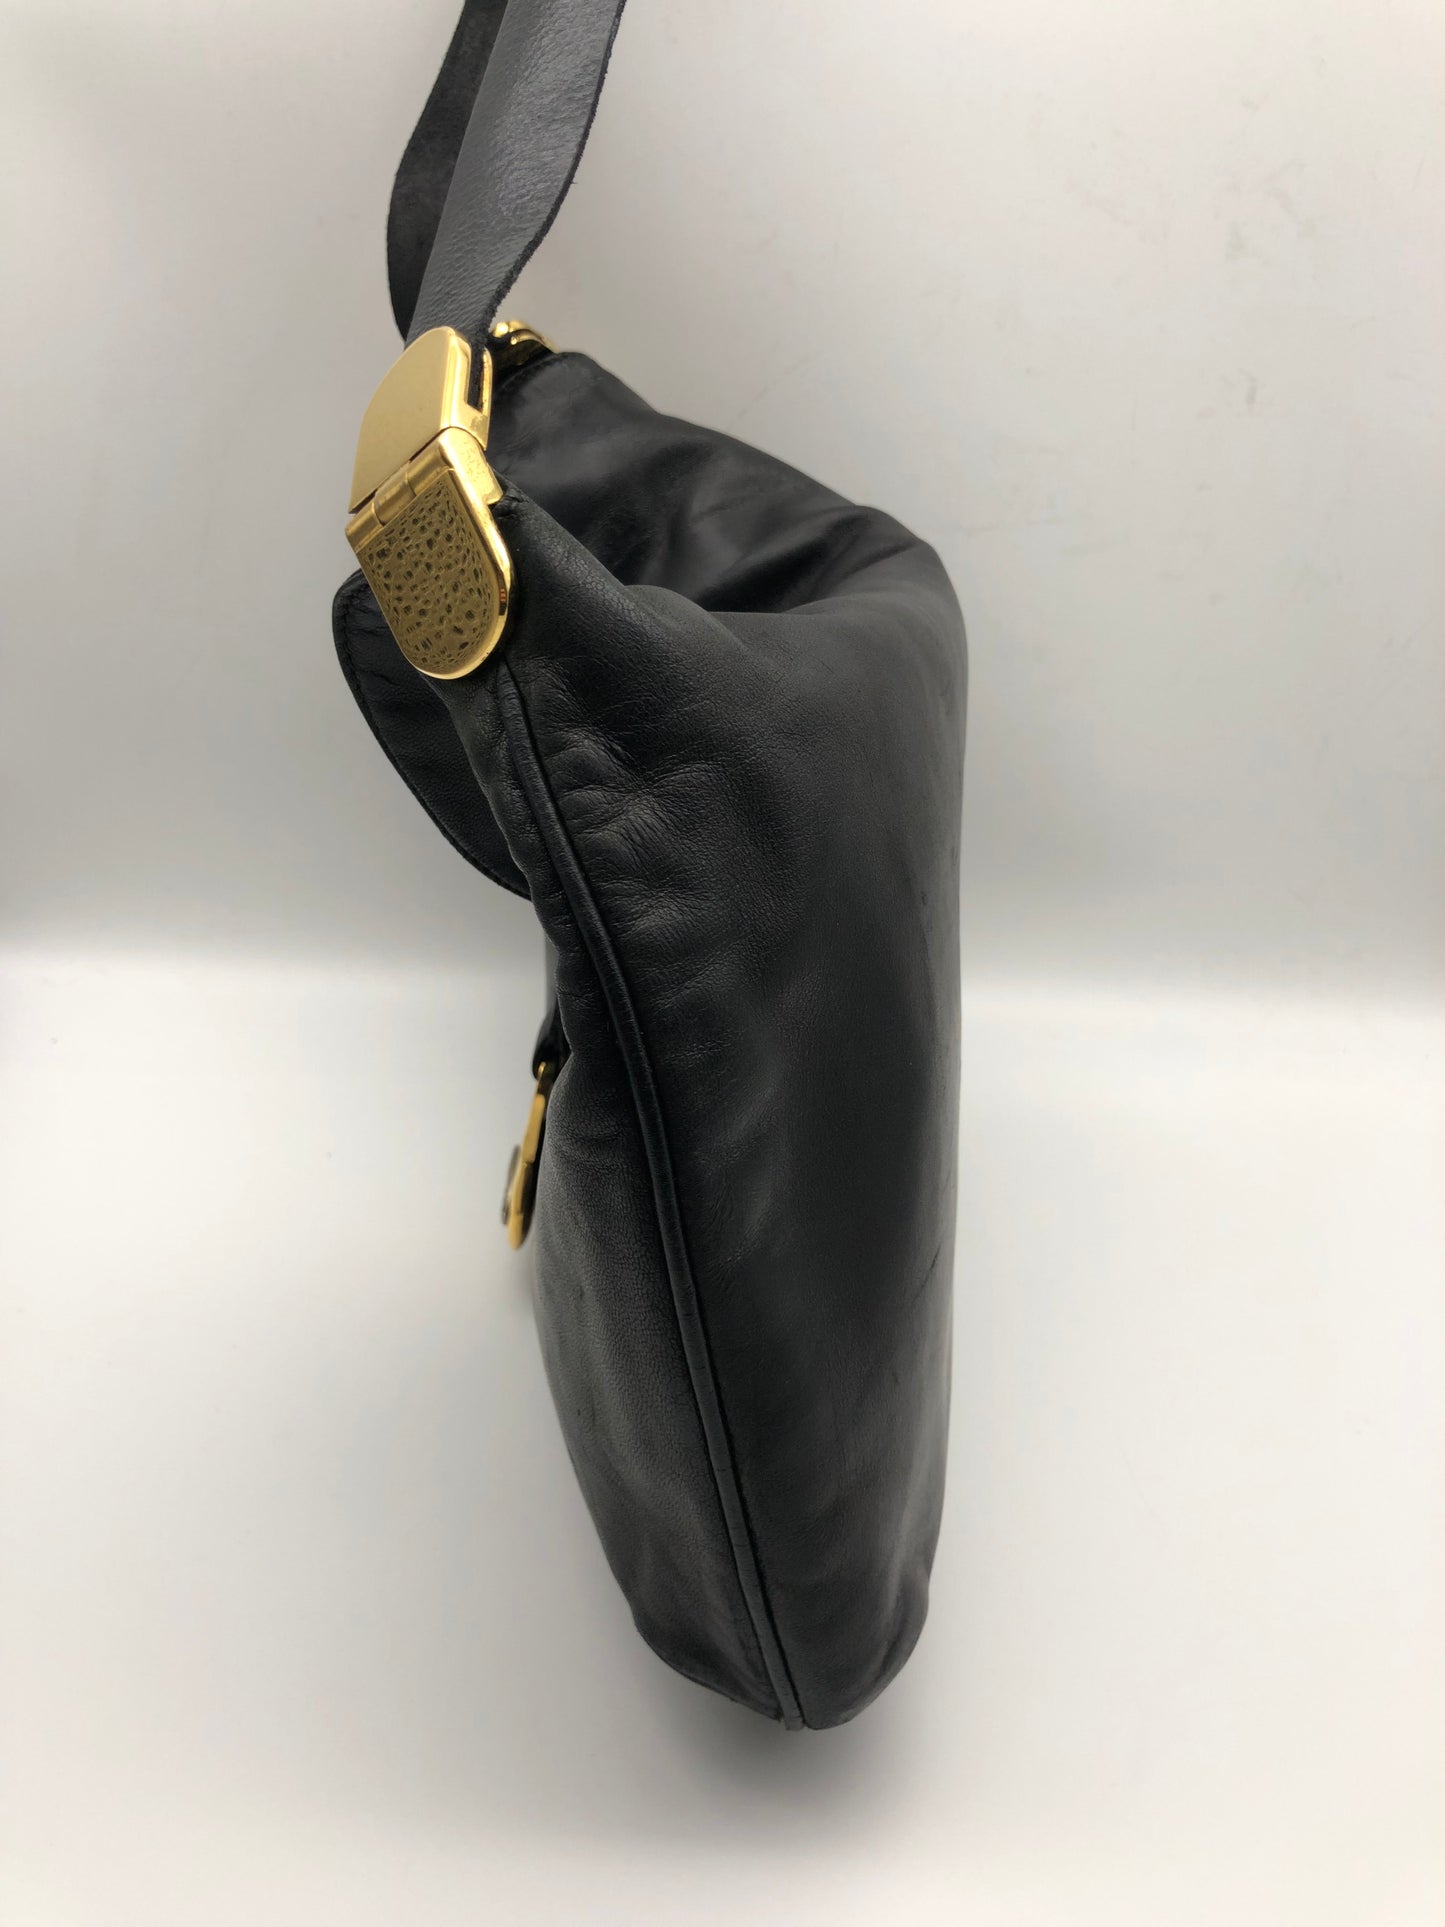 Authentic GUCCI Black Lamb Skin Leather Hobo Shoulder Bag